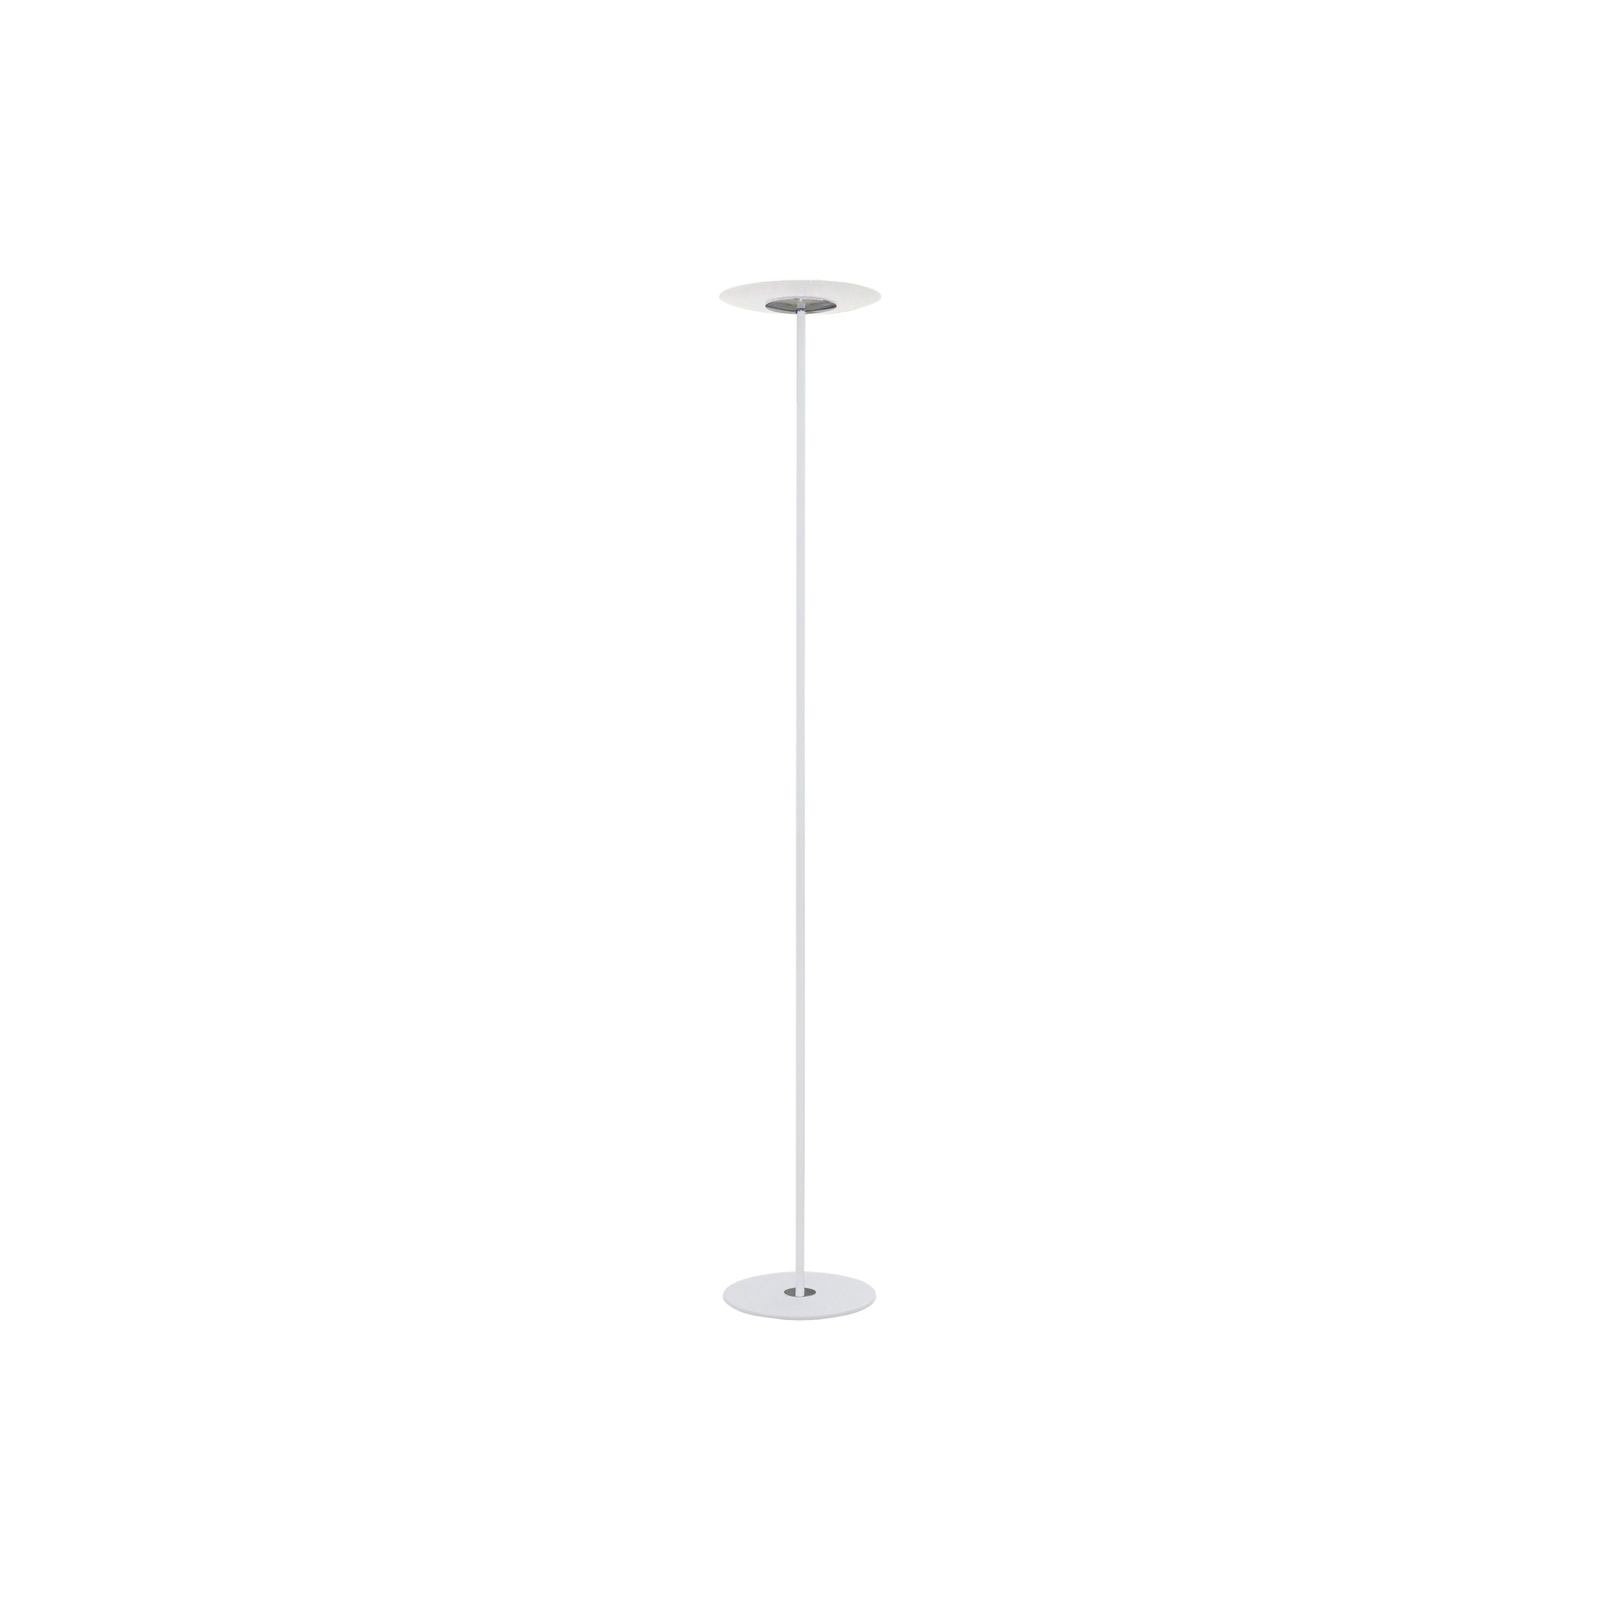 Aluminor Kitel 79 LED-uplight lampe, hvid